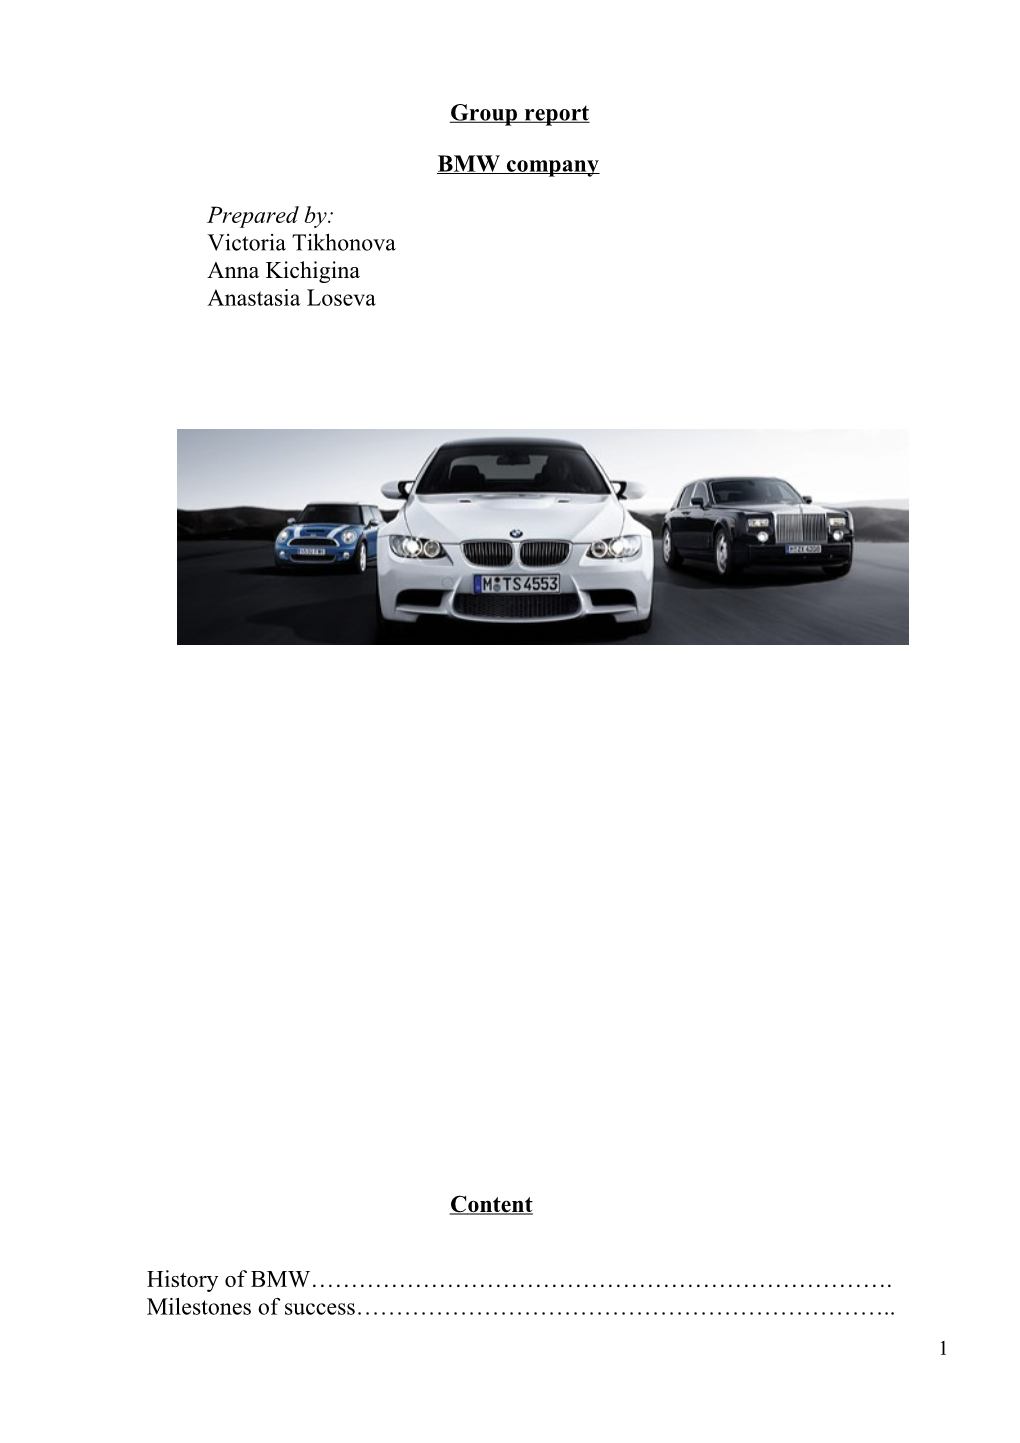 History of BMW Company